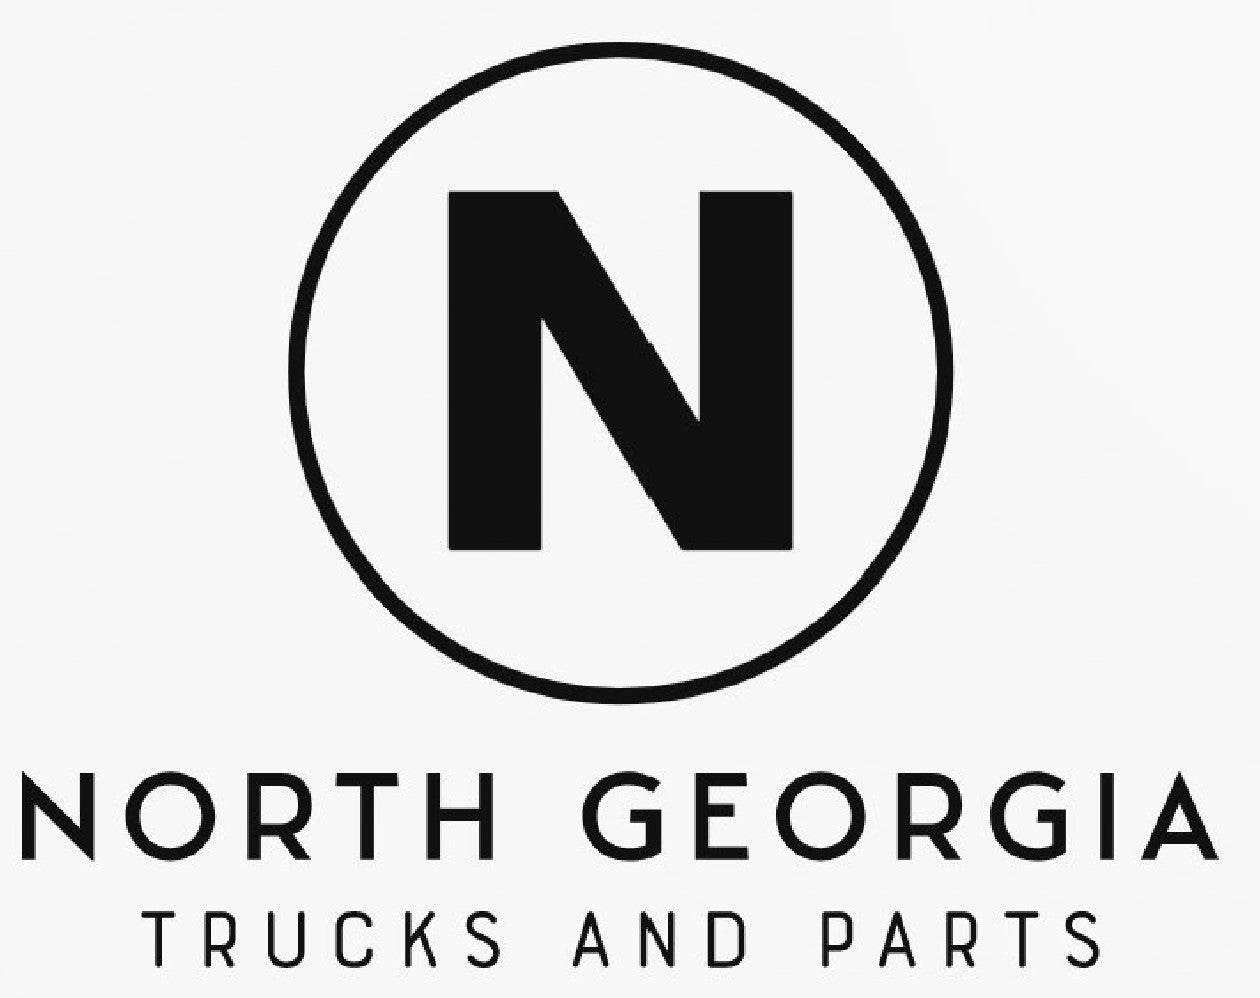 Injector Truck Parts - North Georgia Trucks and Parts